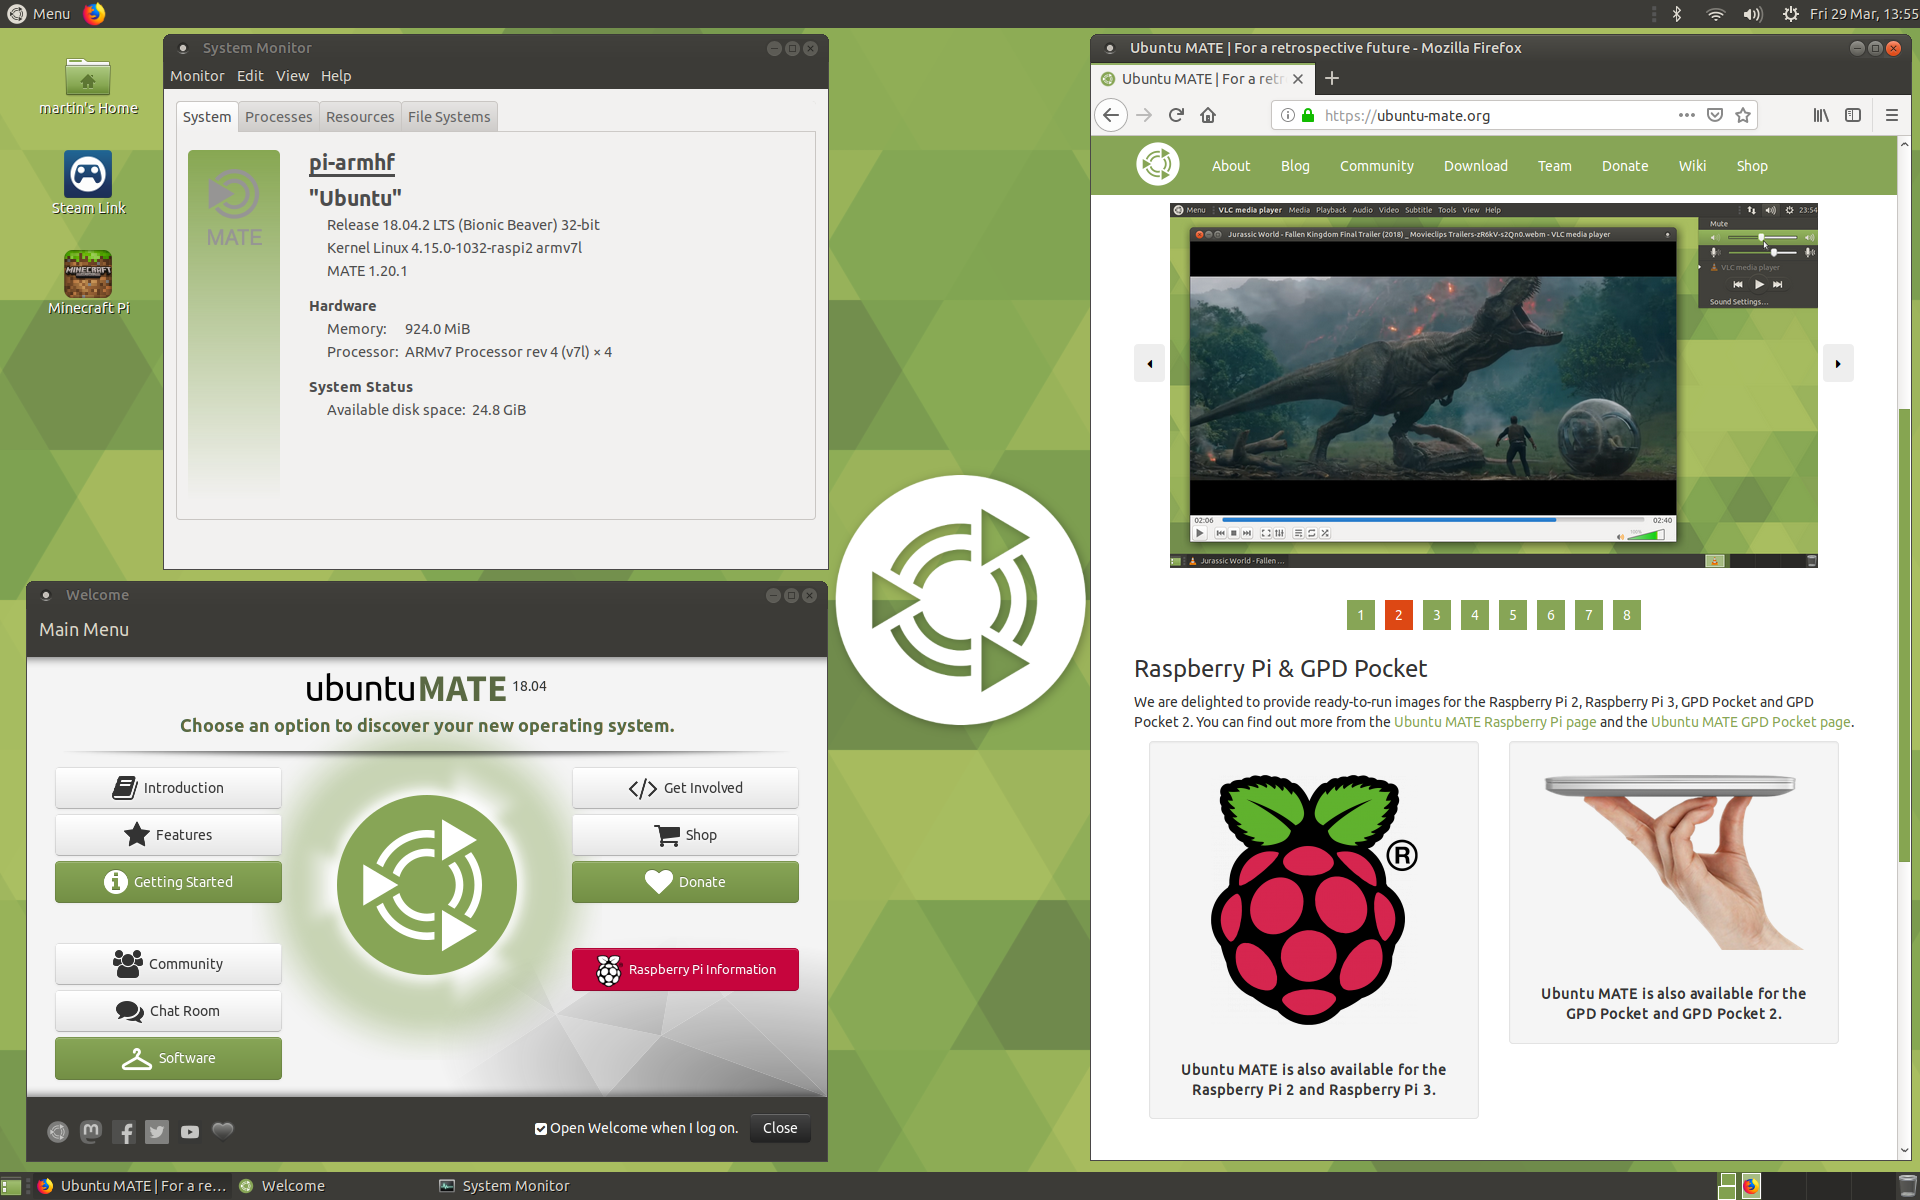 Ubuntu MATE 16.04 running on the Raspberry Pi 3